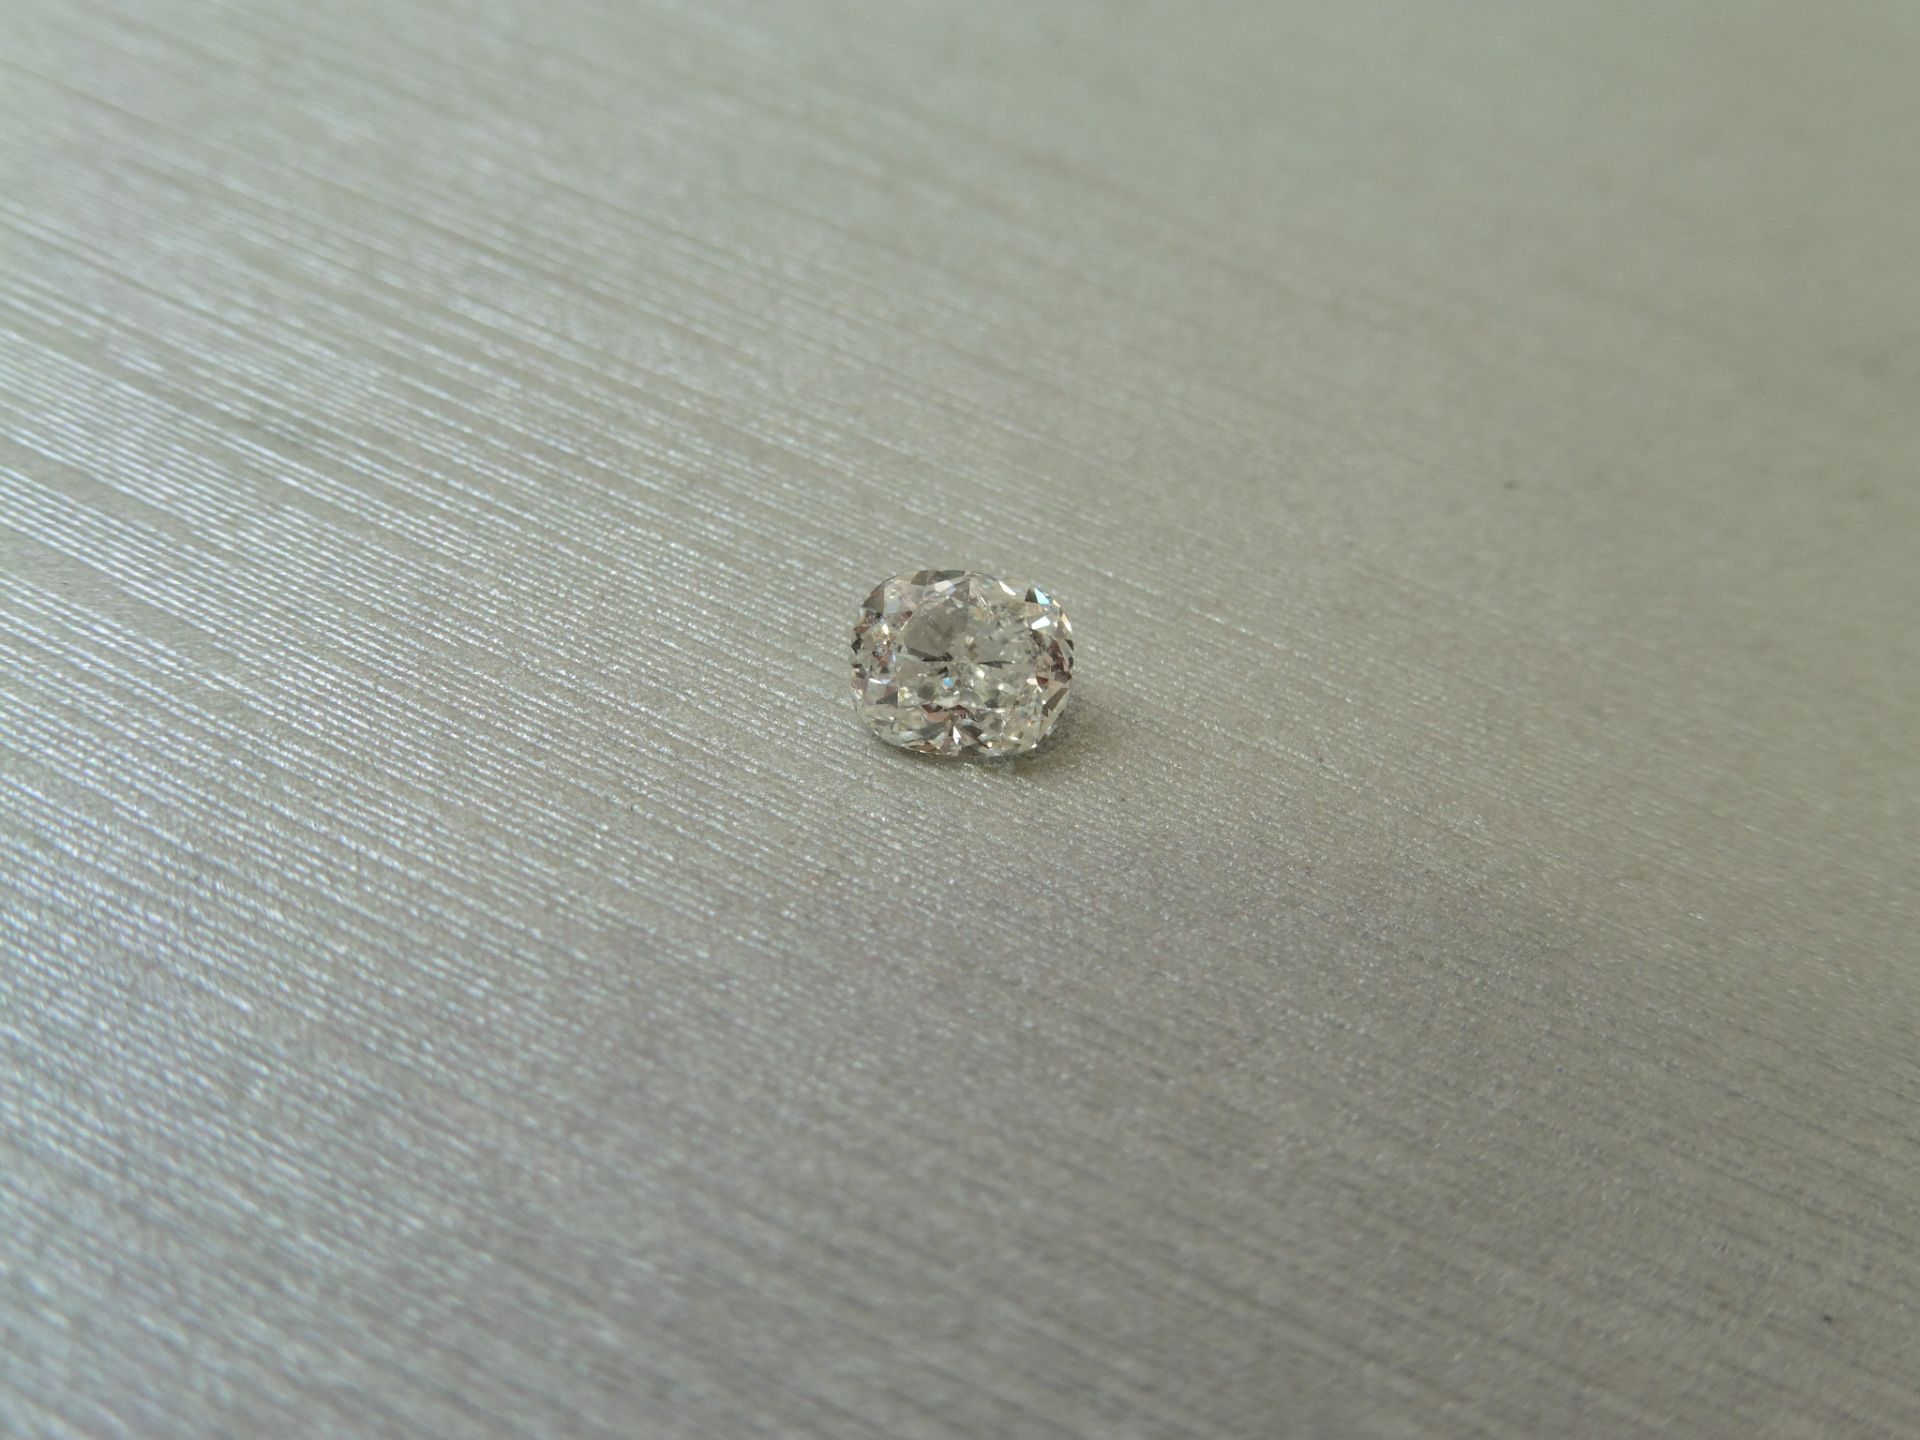 1.21ct single cushion cut diamond. Measurements 6.11 x 5.89 x 4.10mm. G colour and Si1 clarity.